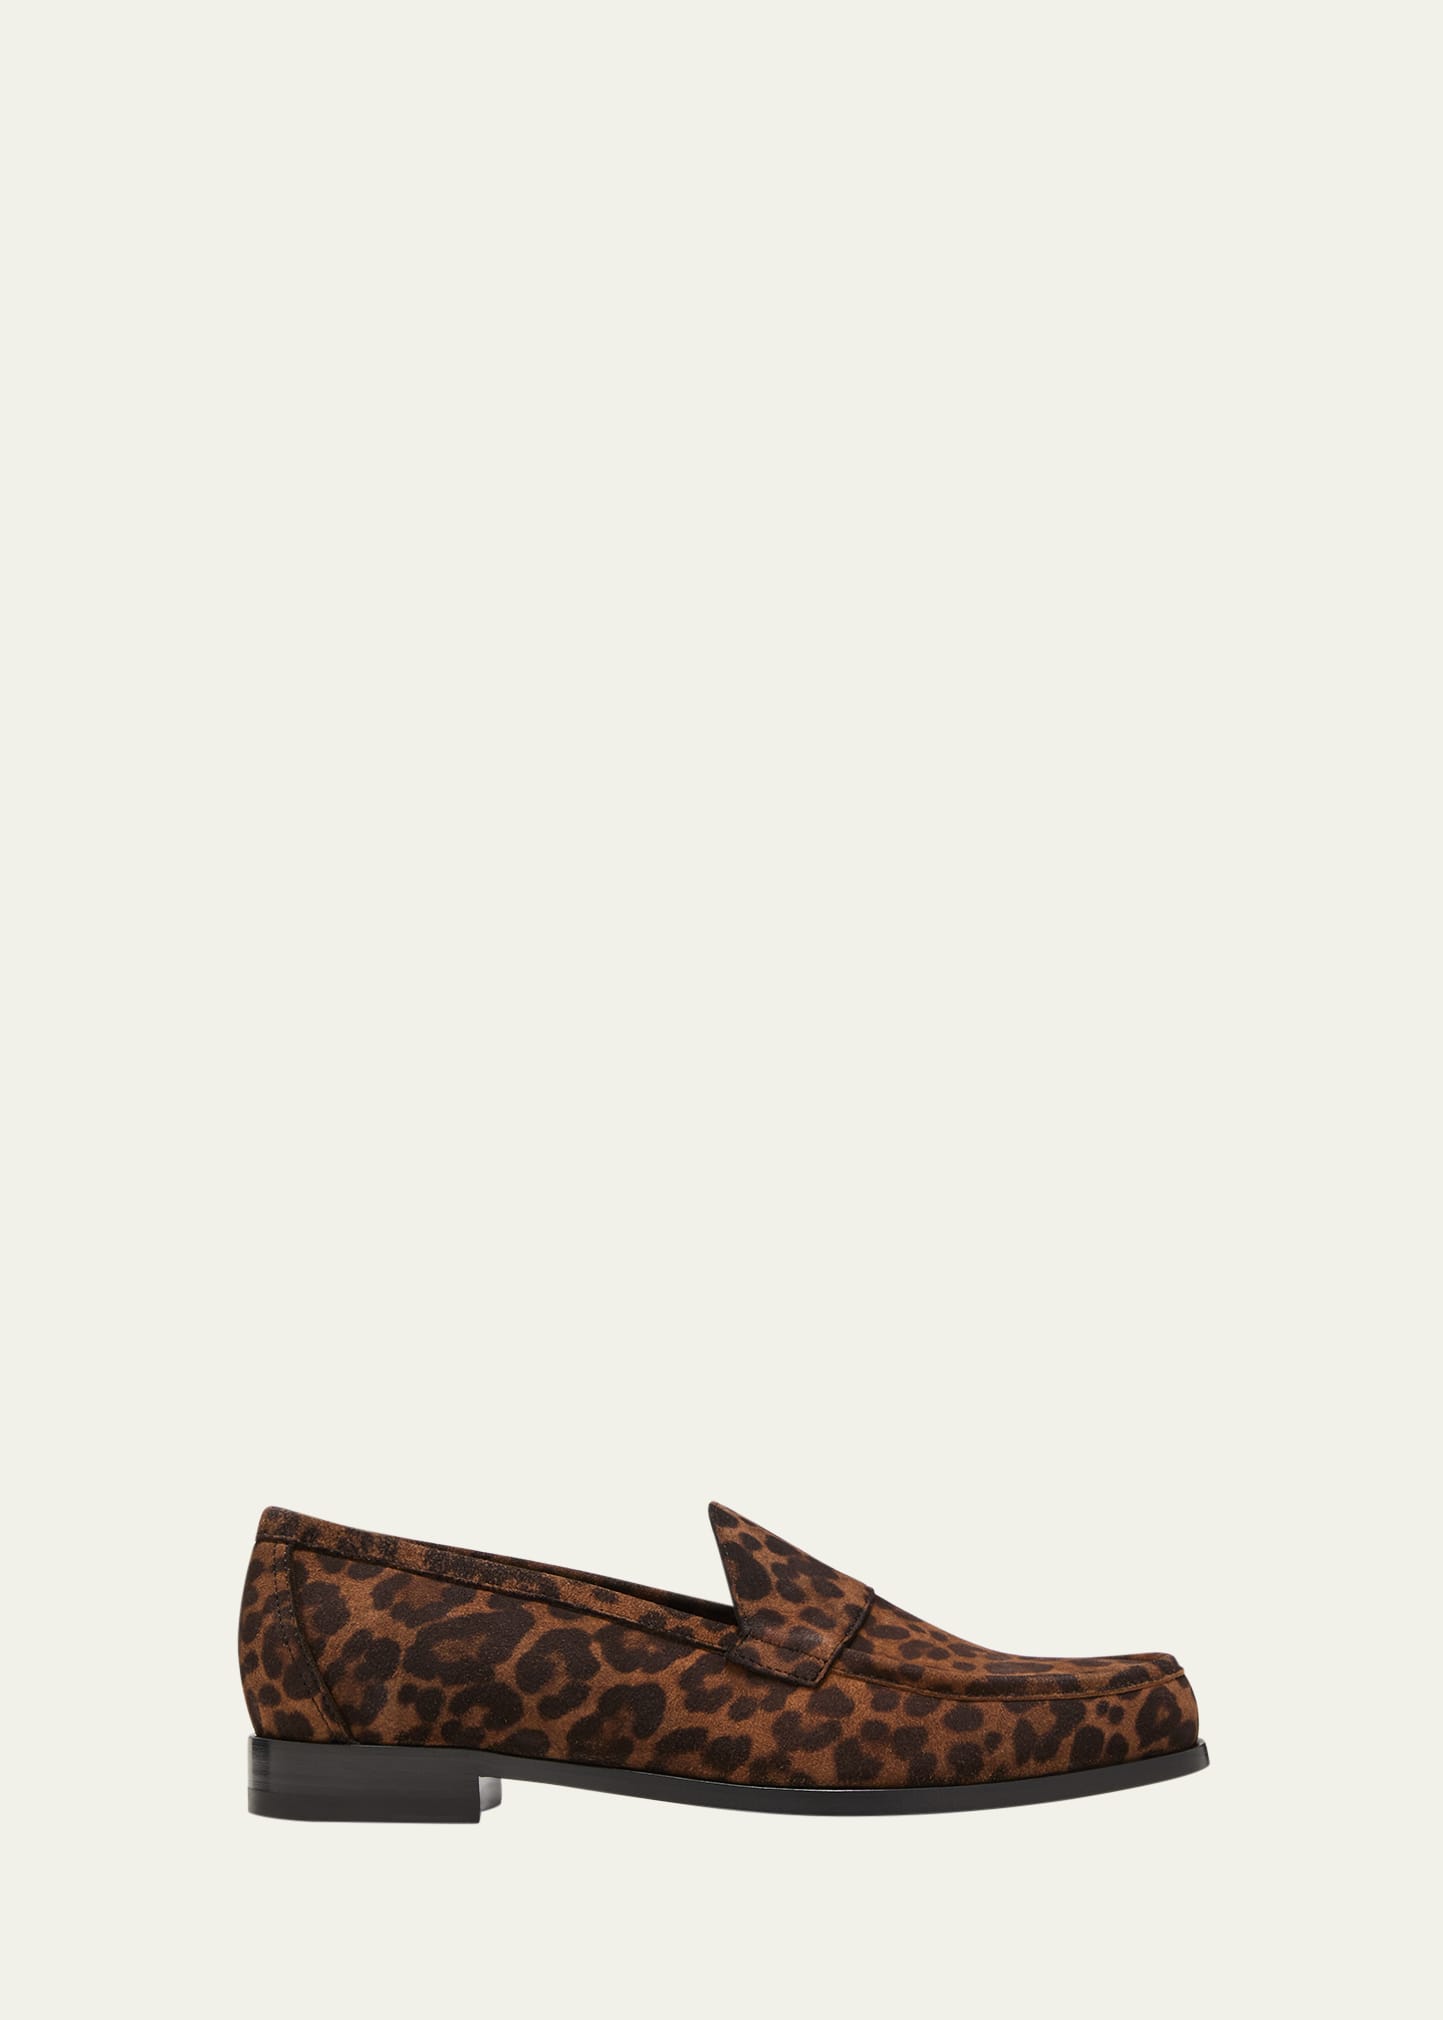 Pierre Hardy Hardy Colorblock Leather Loafers In Leopard